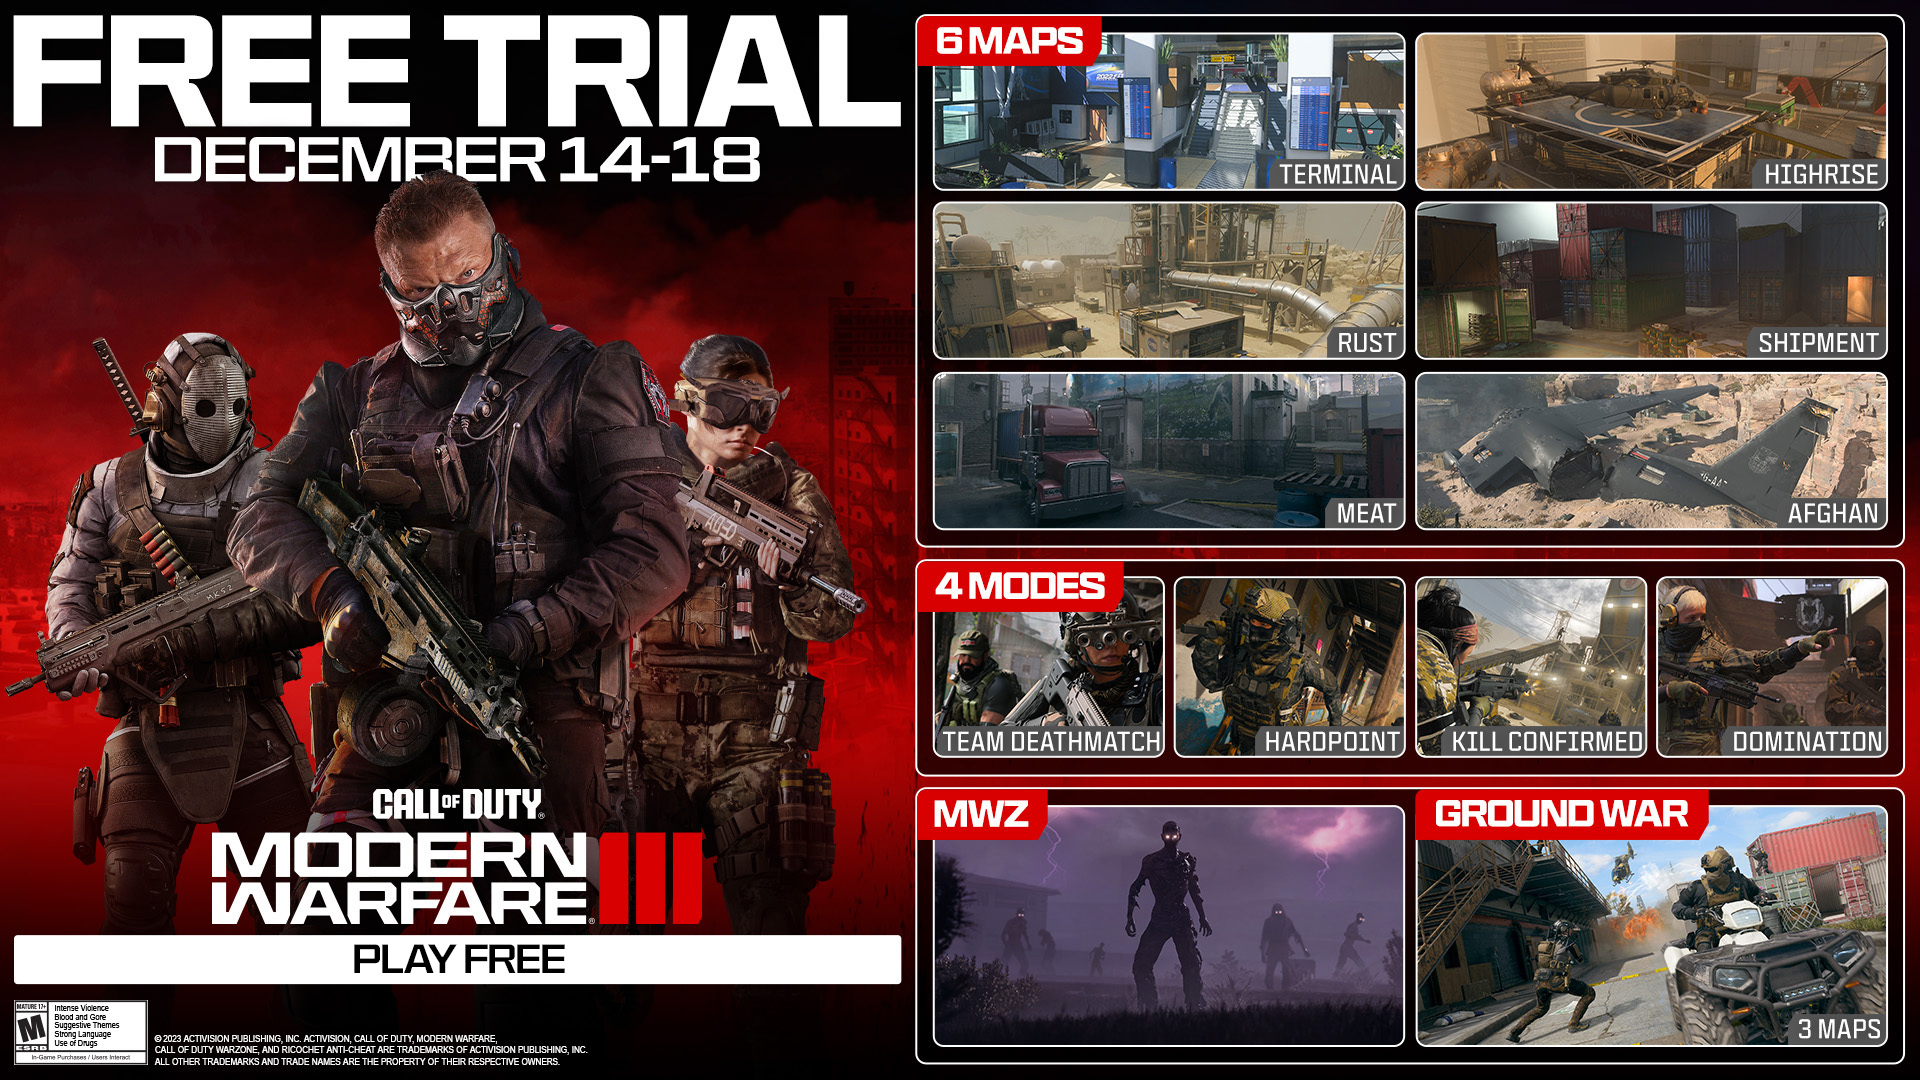 Call of Duty Modern Warfare 2 terá multiplayer gratuito de 16 até 20 de  março 